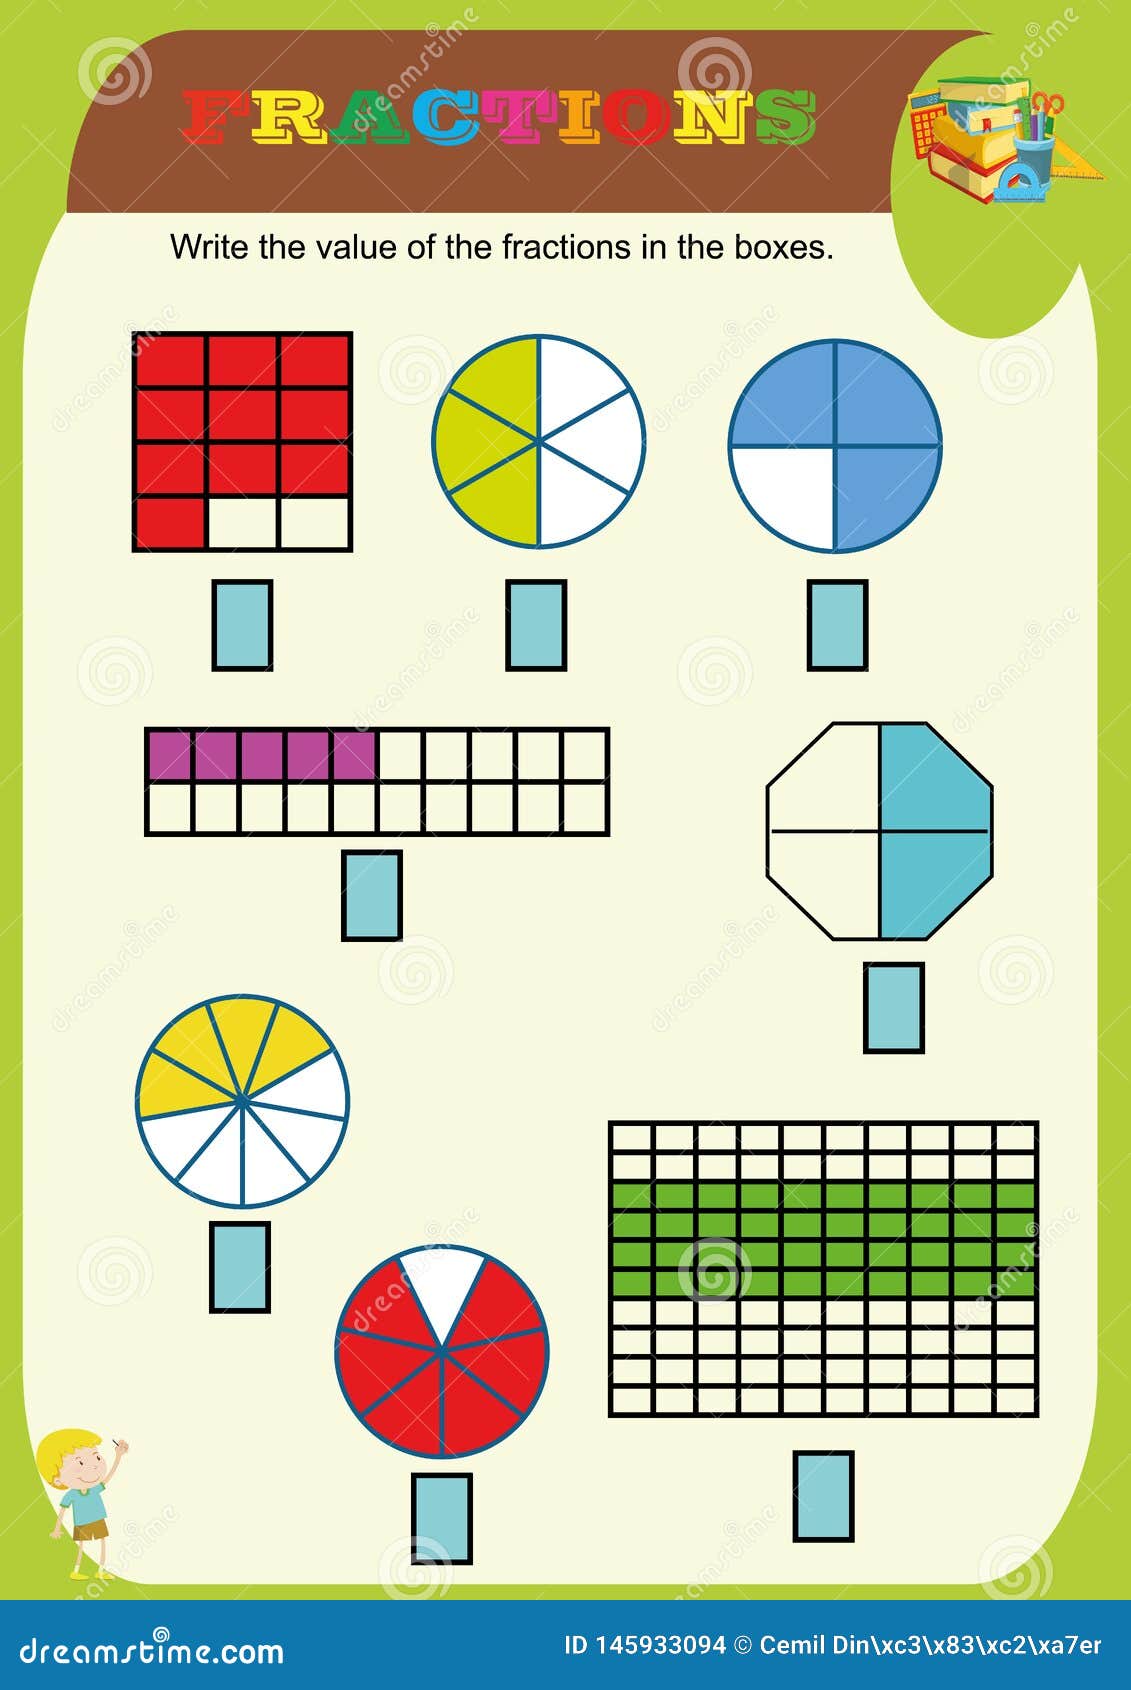 circle-the-correct-fraction-mathematics-math-worksheet-for-kids